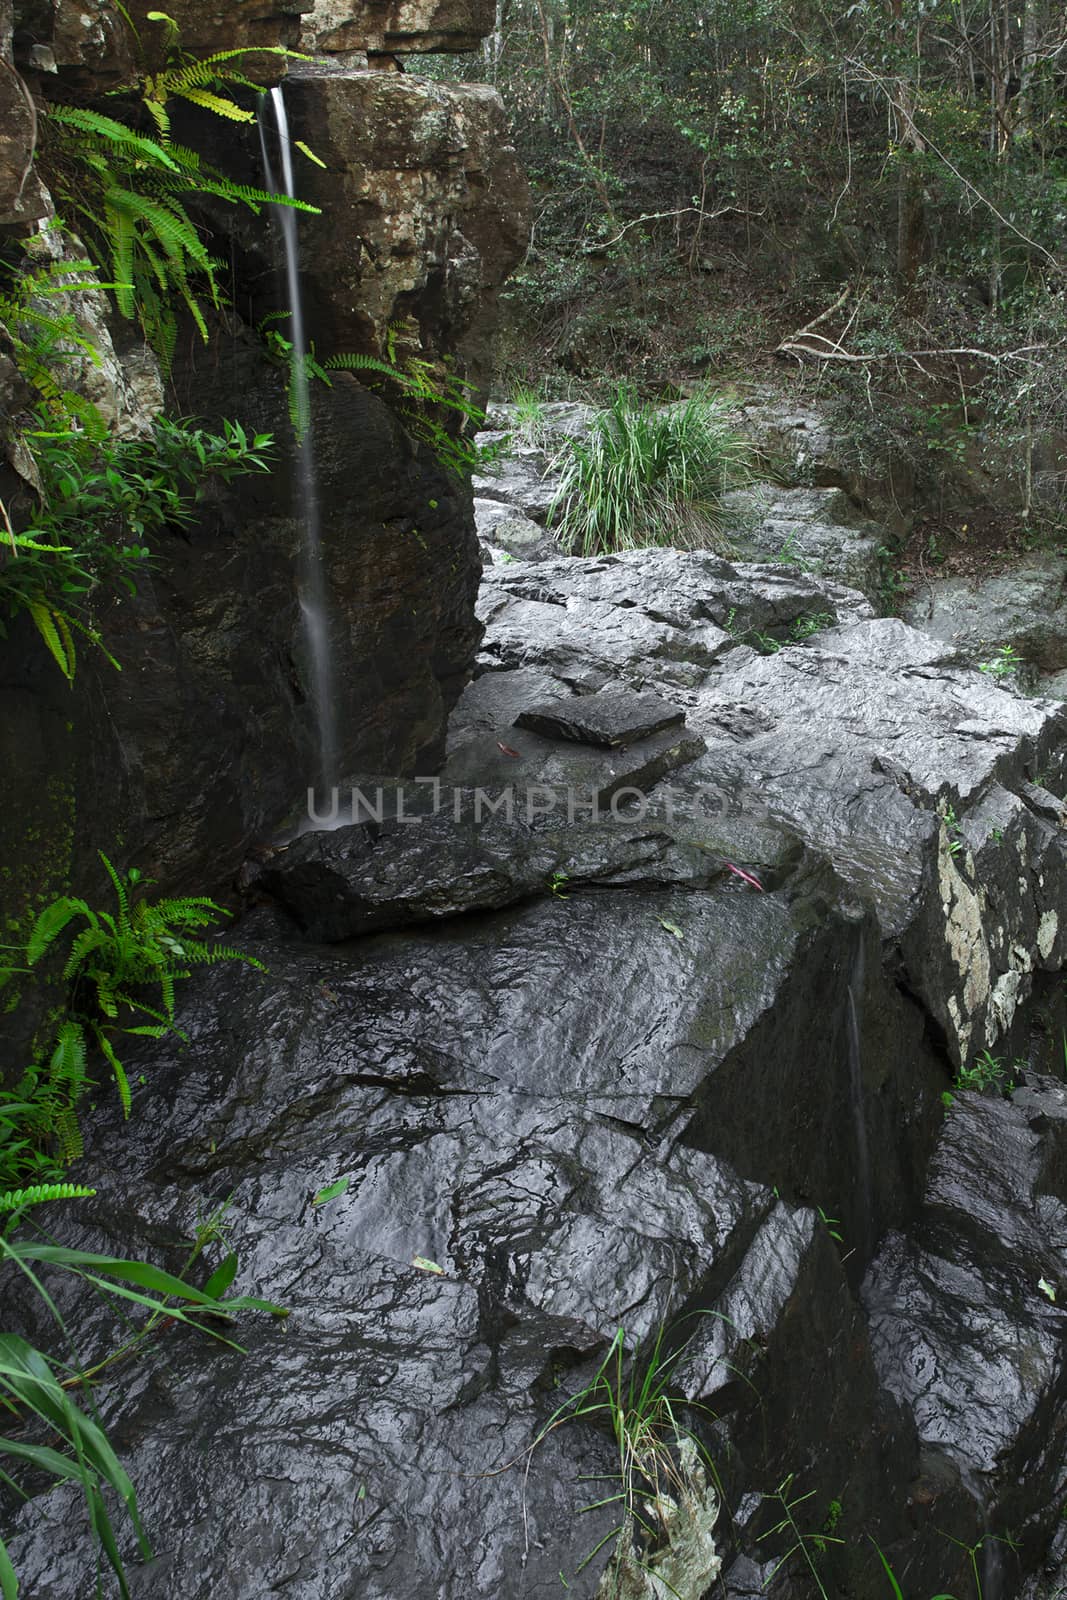 J C Slaughter Falls is a cascade waterfall located near Mt Coot-tha in Brisbane, Queensland, Australia